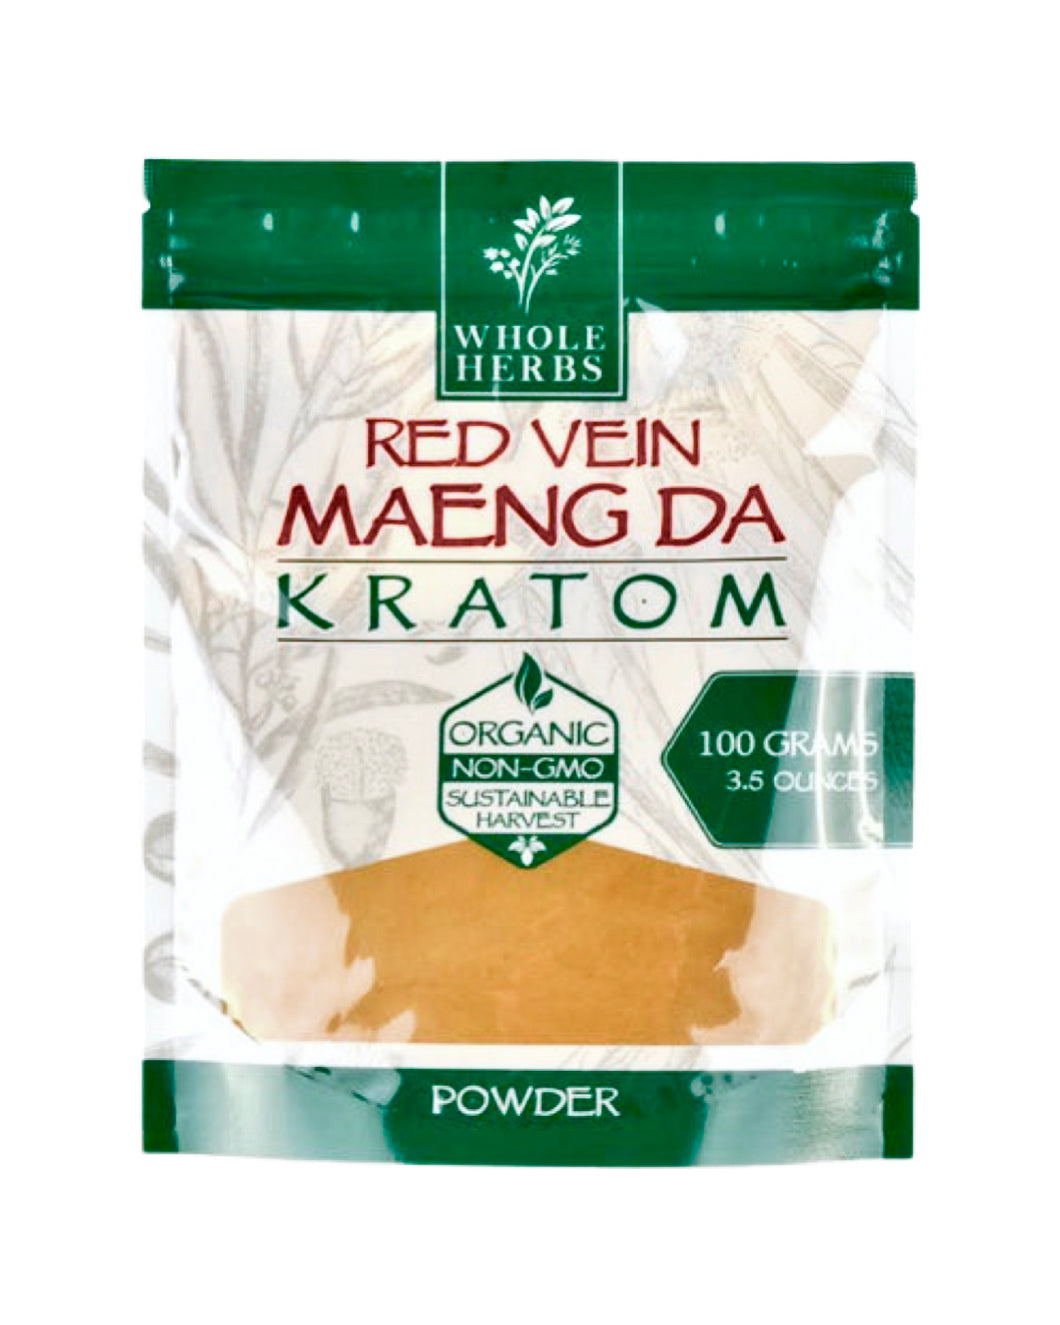 A 3.5 oz 100 gram bag of Whole Herbs Red Vein Maeng Da Kratom Powder.